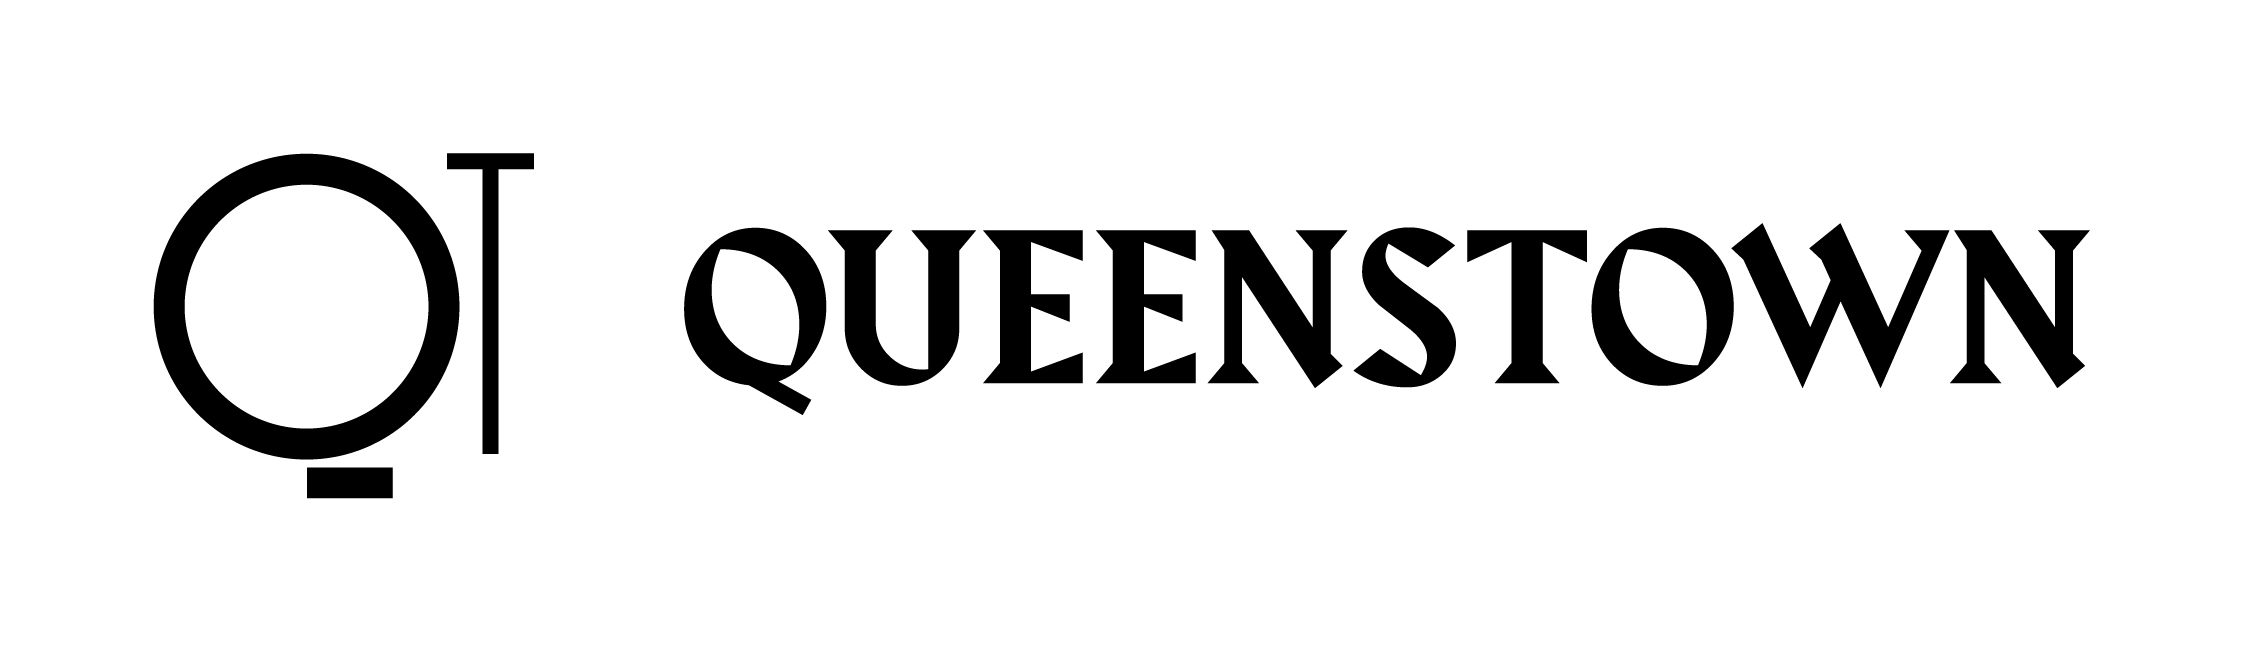 Qt queenstown logo 03 black rgb